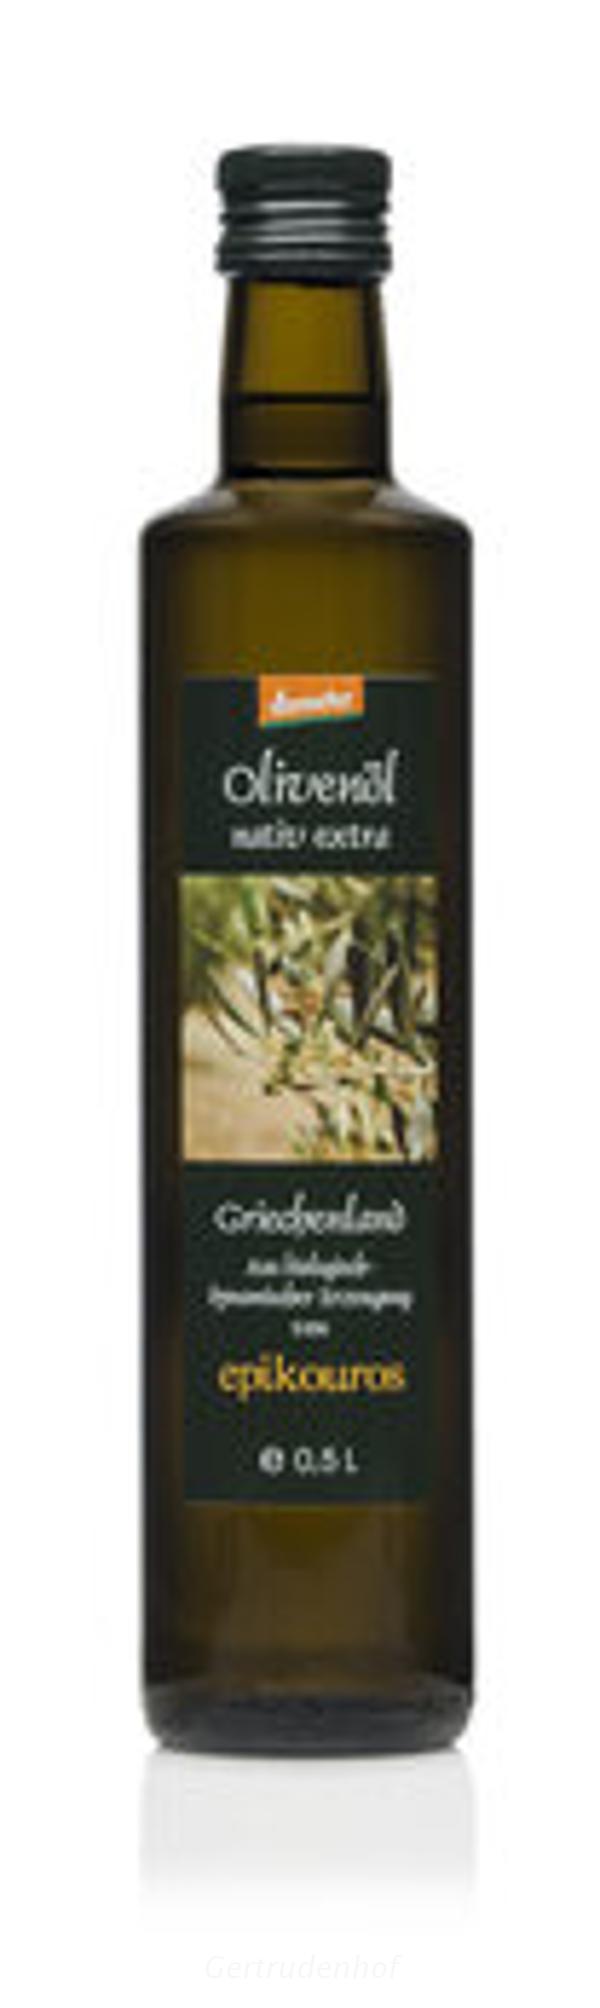 Produktfoto zu Demeter Olivenöl, extra nativ, Epikouros